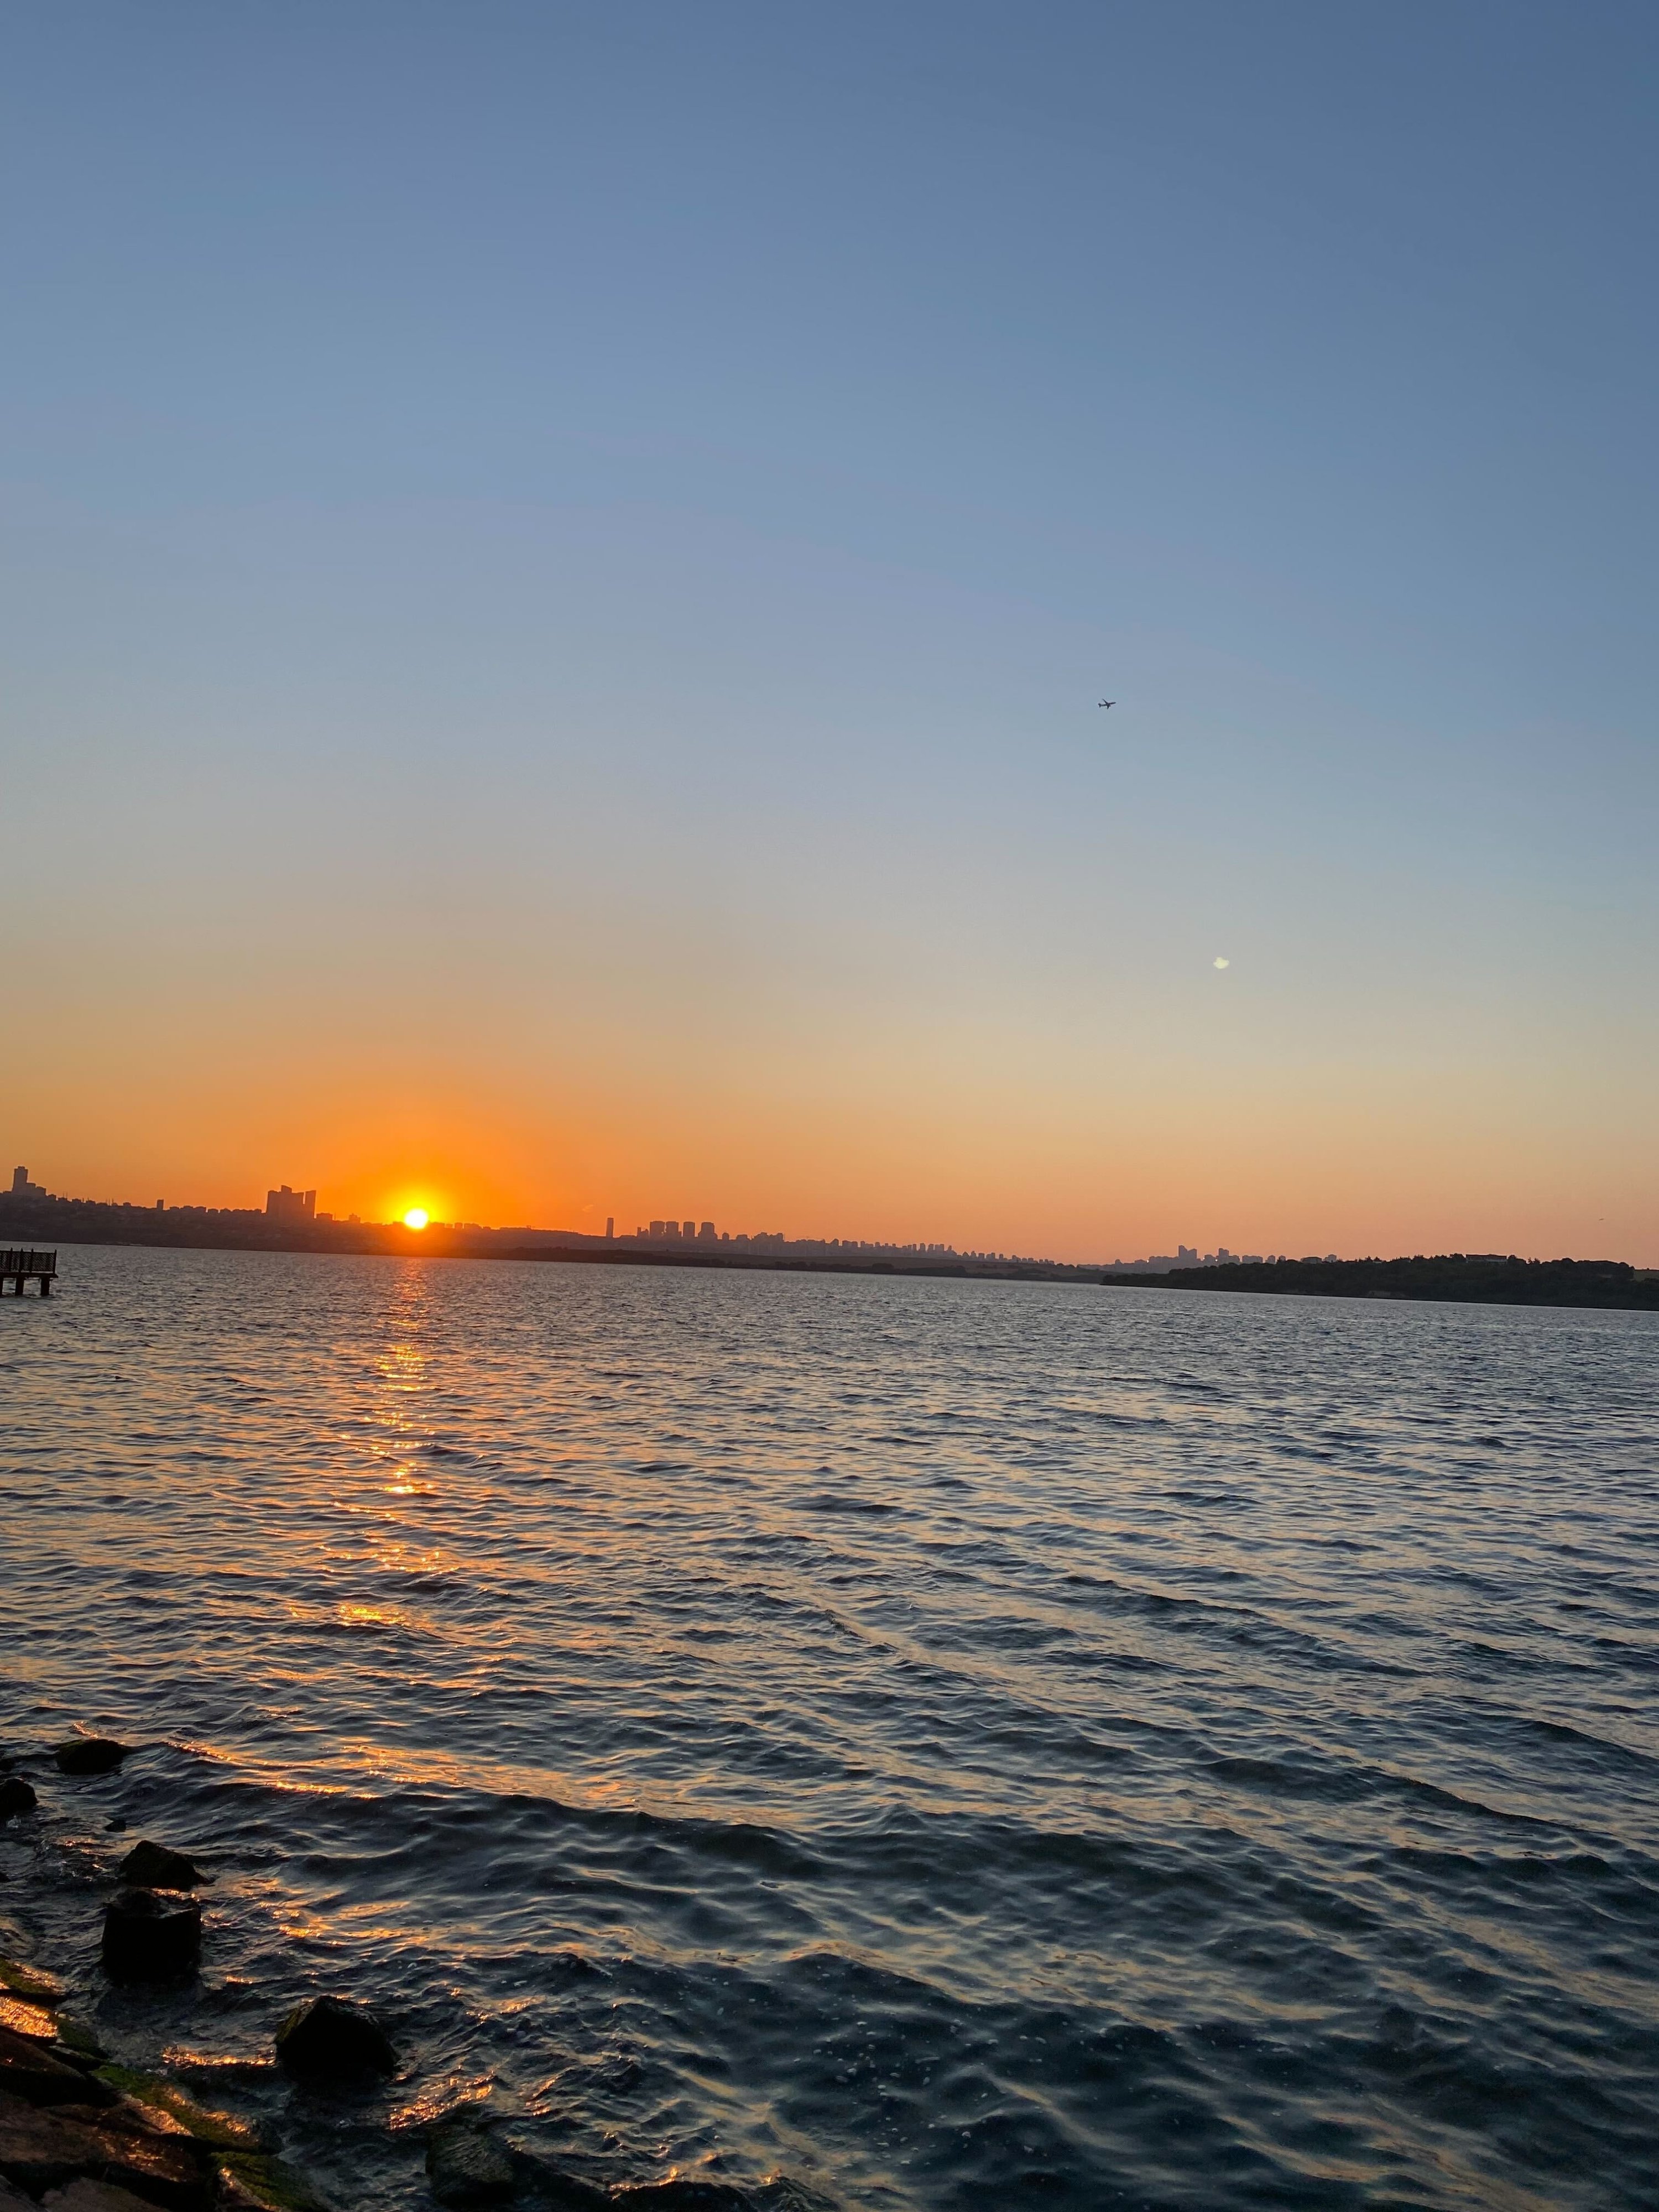 Lake Küçükçekmece at sunset, Istanbul, Turkey, June 6, 2022. (Photo by Buse Keskin)